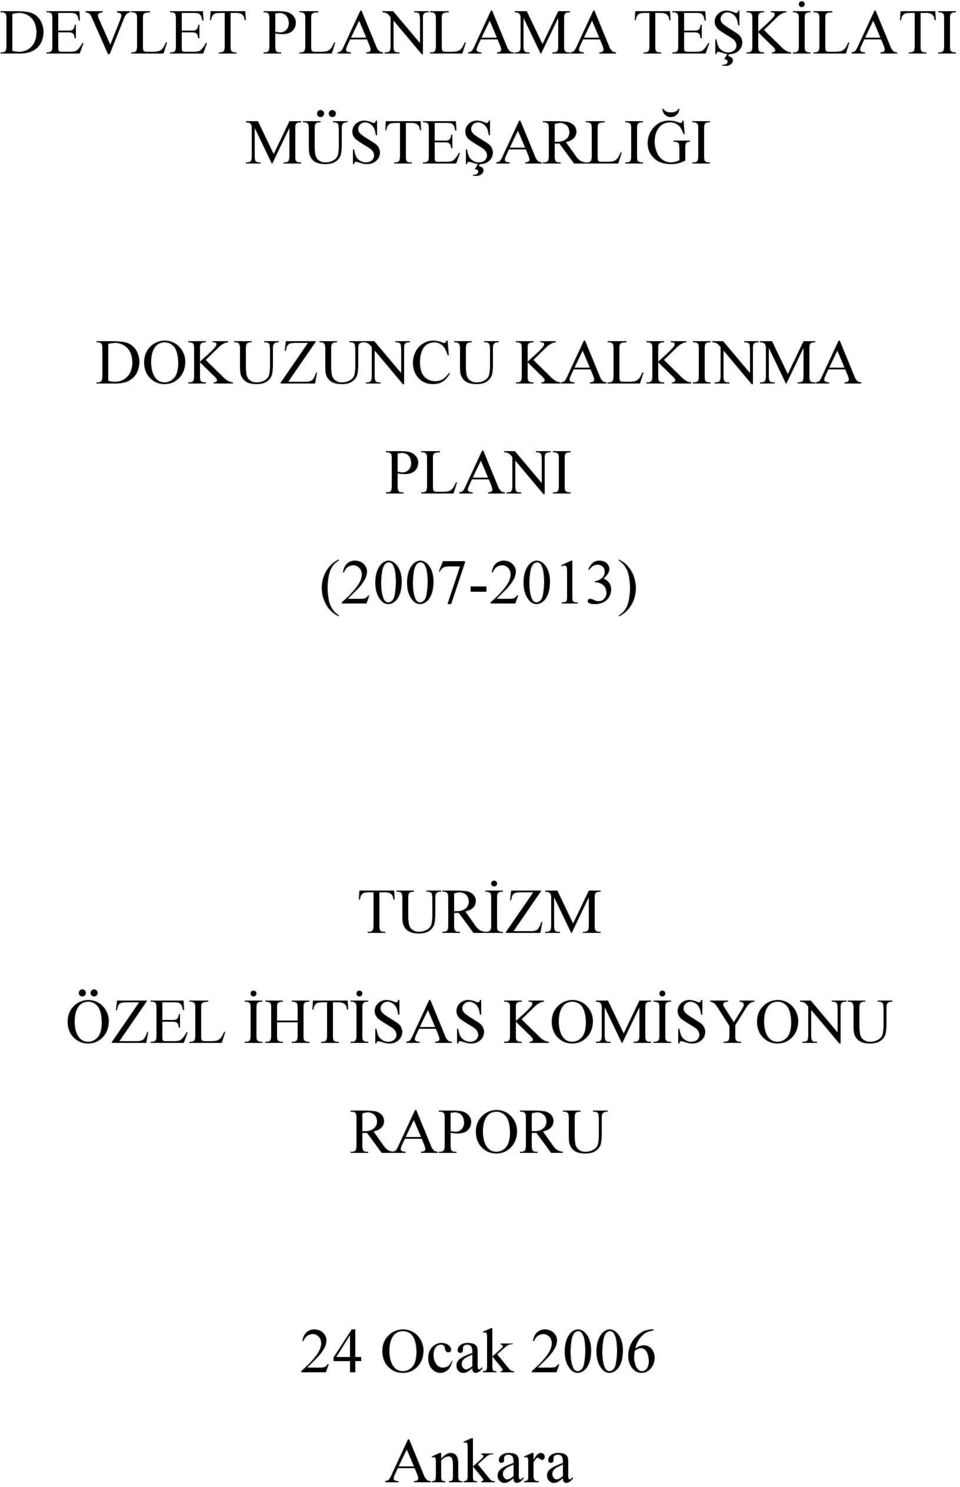 PLANI (2007-2013) TURİZM ÖZEL